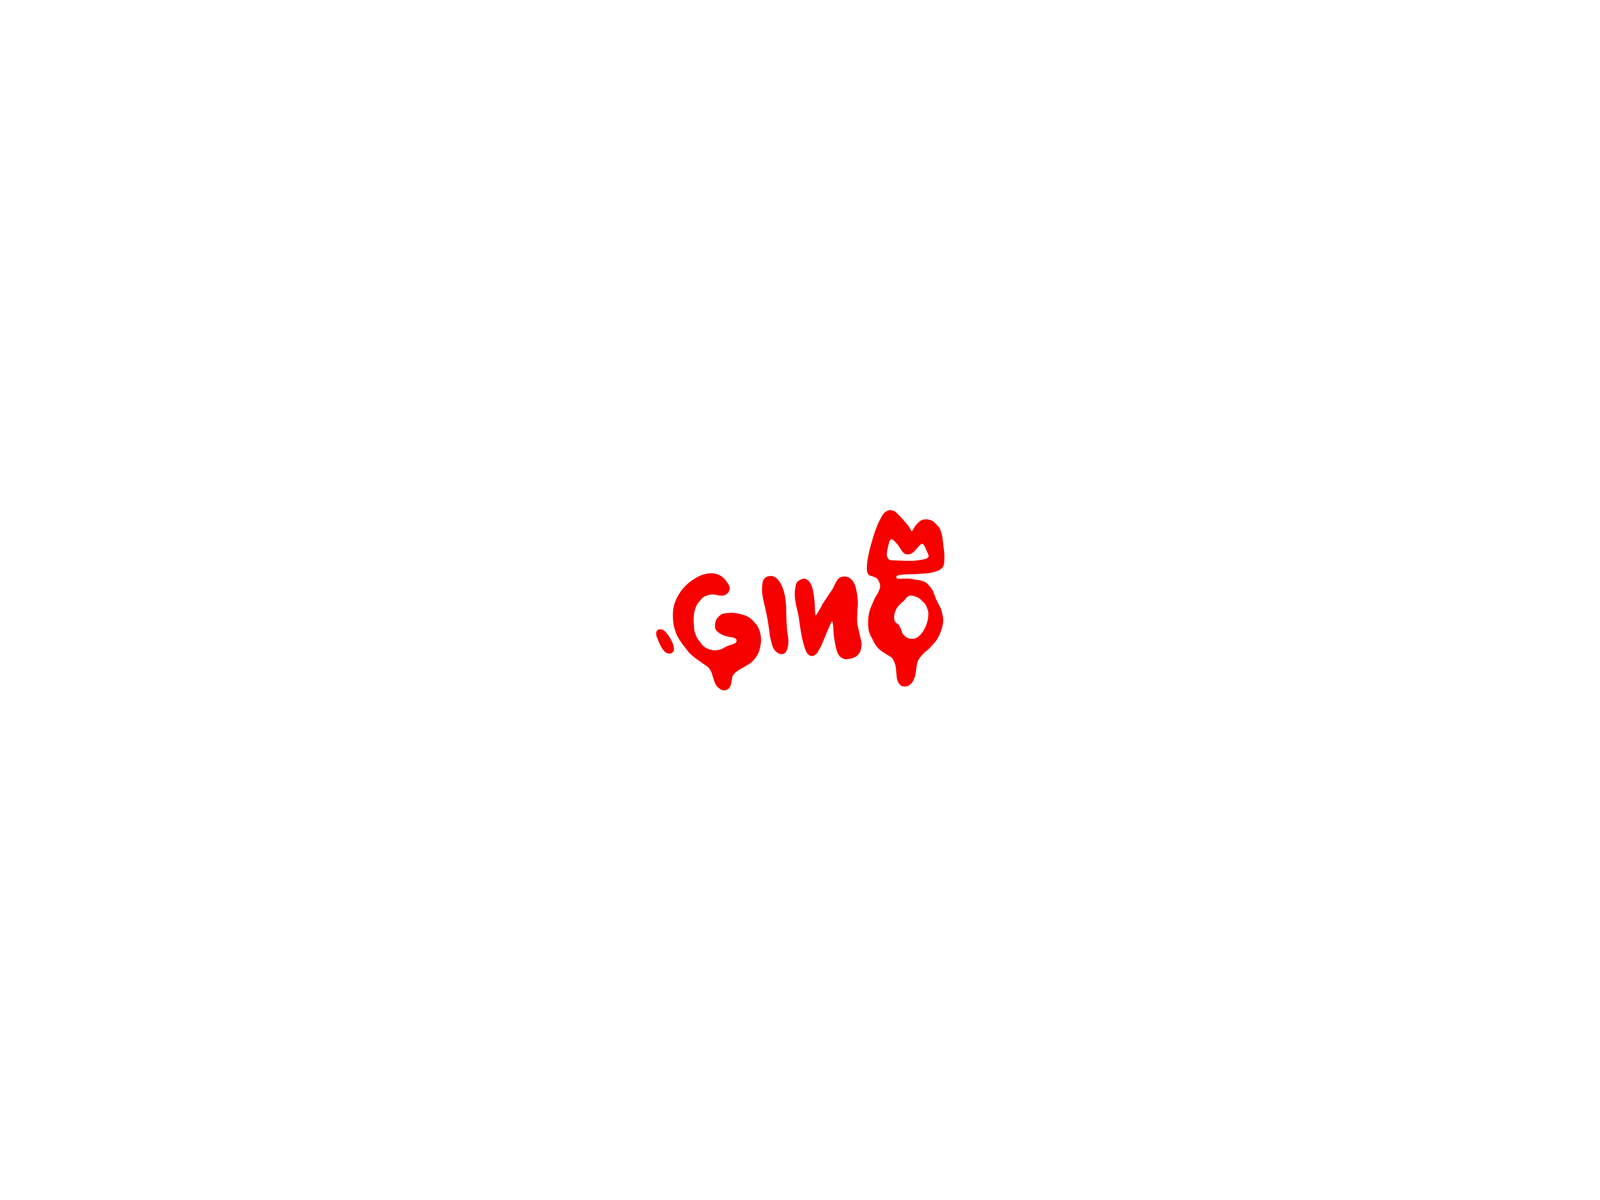 Hi my name is GINO